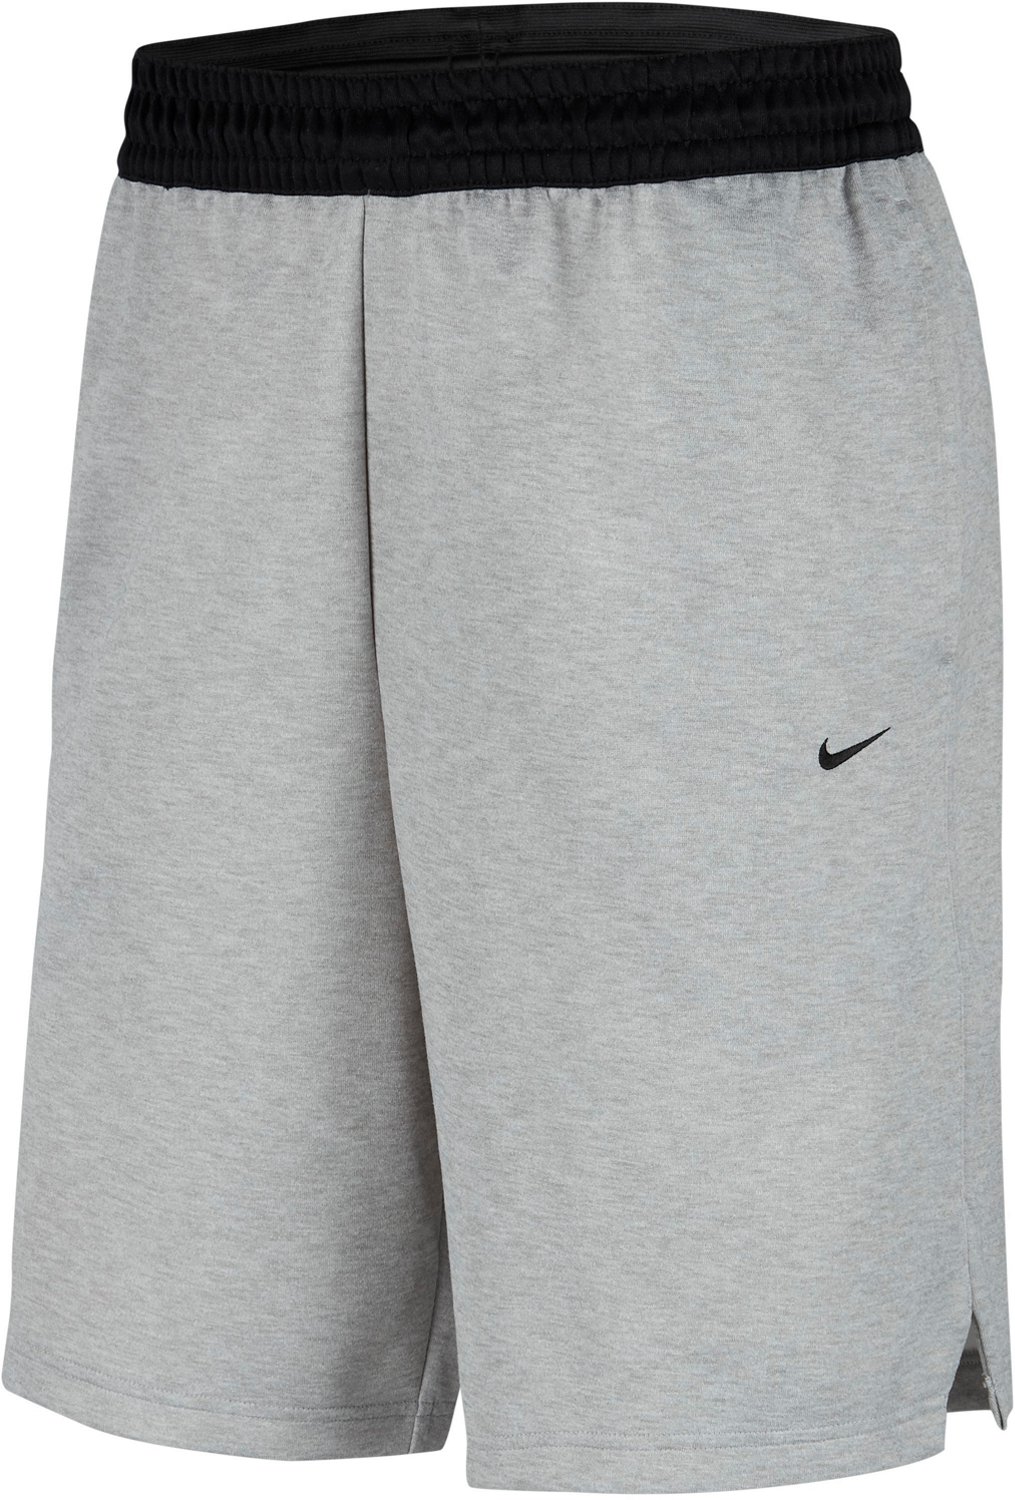 light gray nike shorts